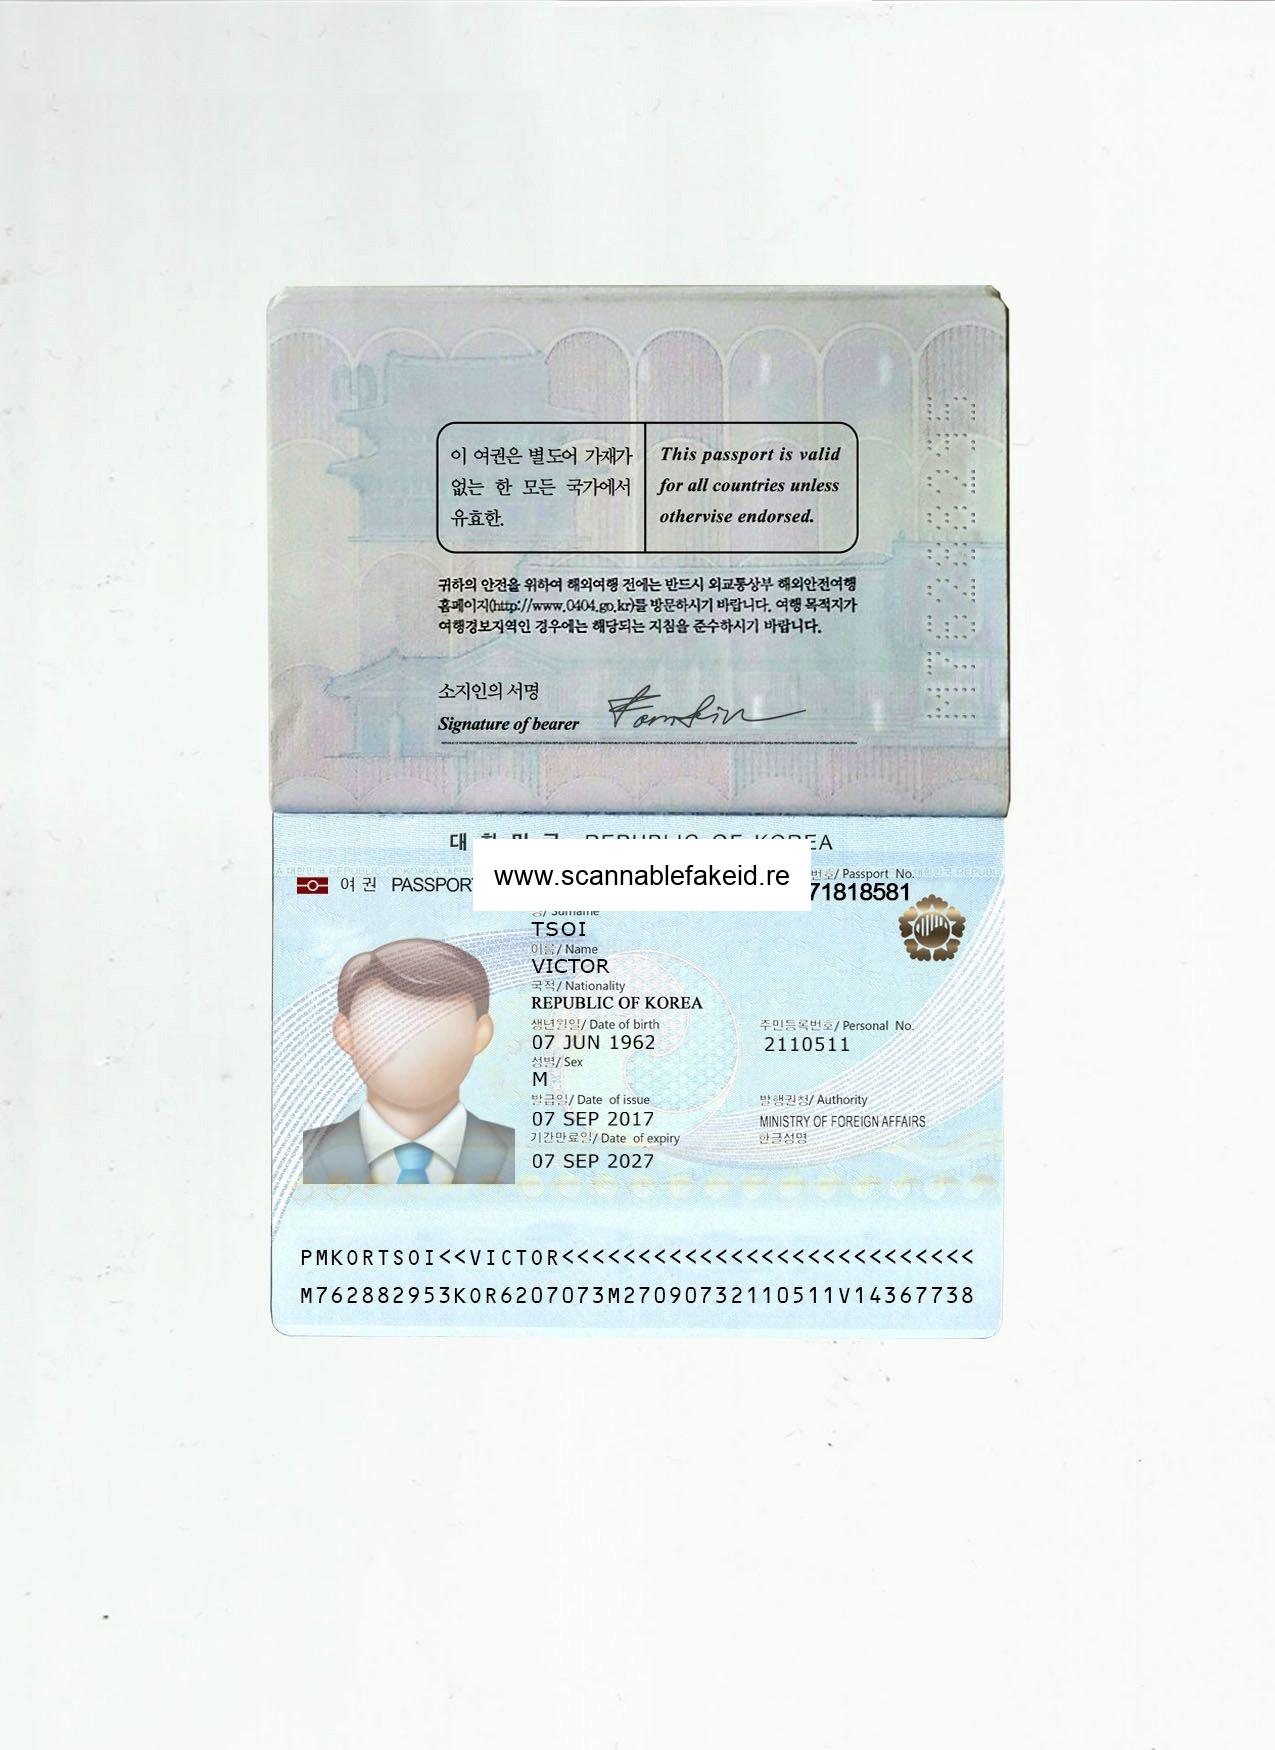 Dominica Fake Passport - Buy Scannable Fake ID Online - Fake Drivers ...